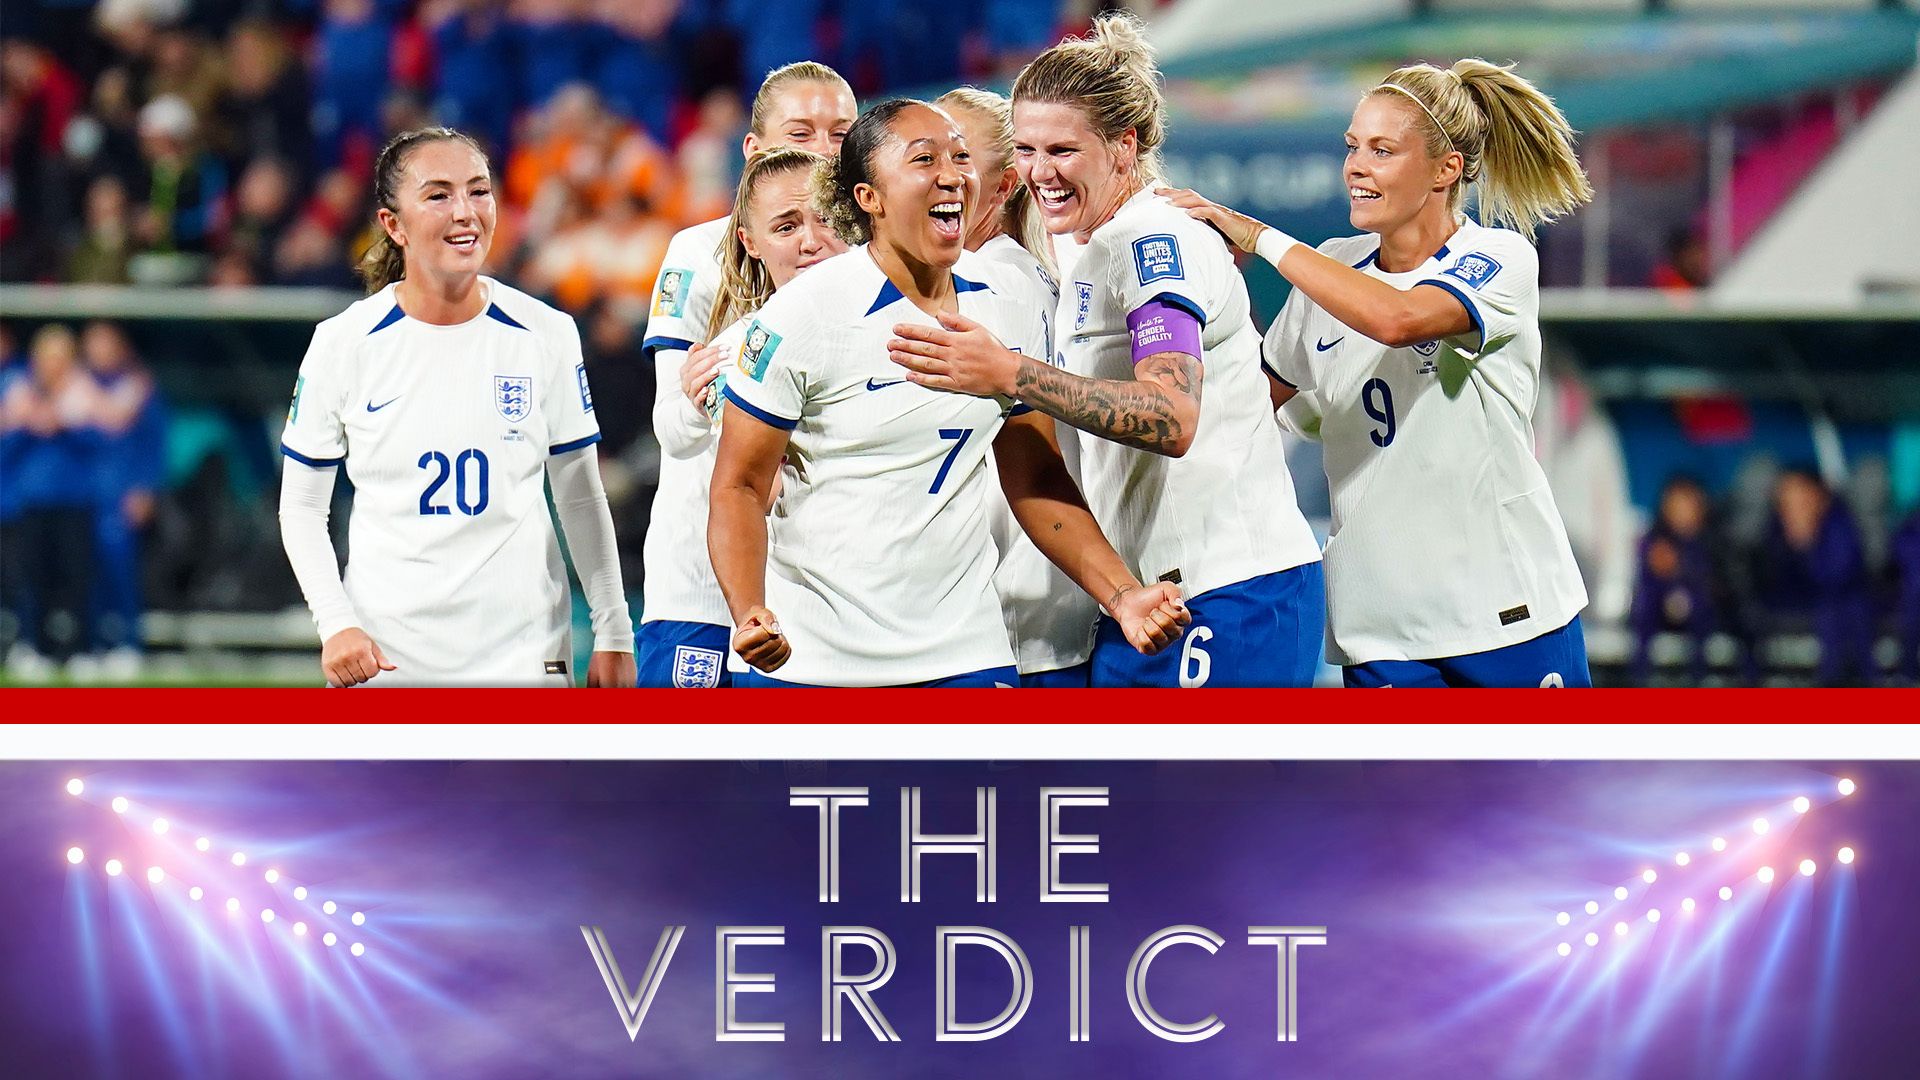 The Verdict: James stars as England cruise into last 16